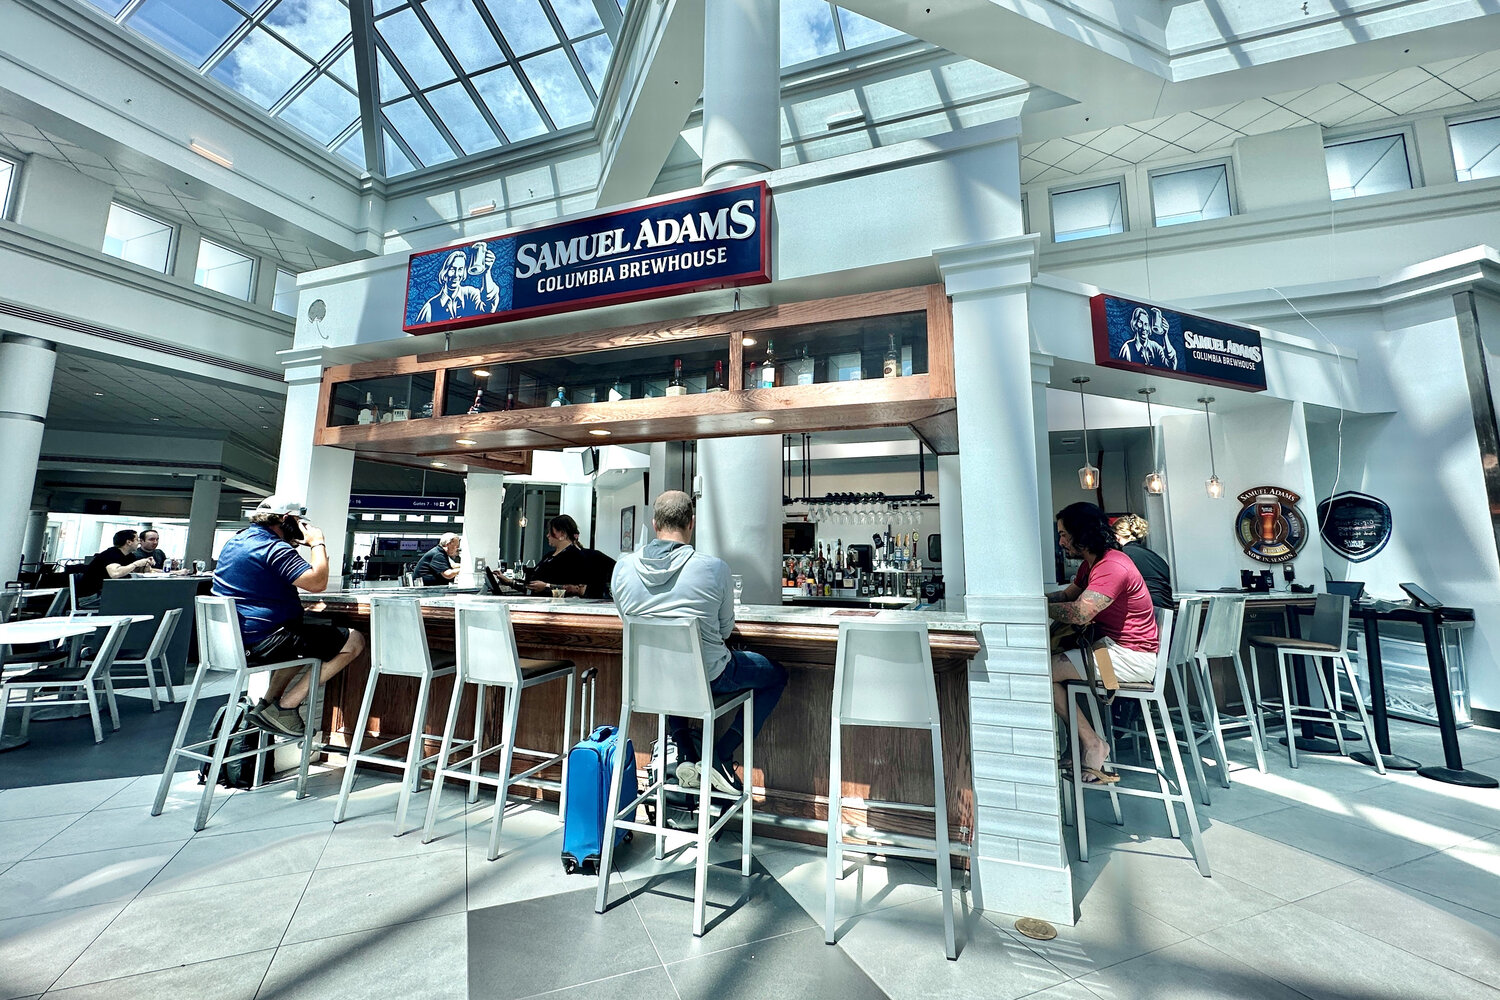 The Columbia Metropolitan Airport's new Samuel Adams Brewhouse